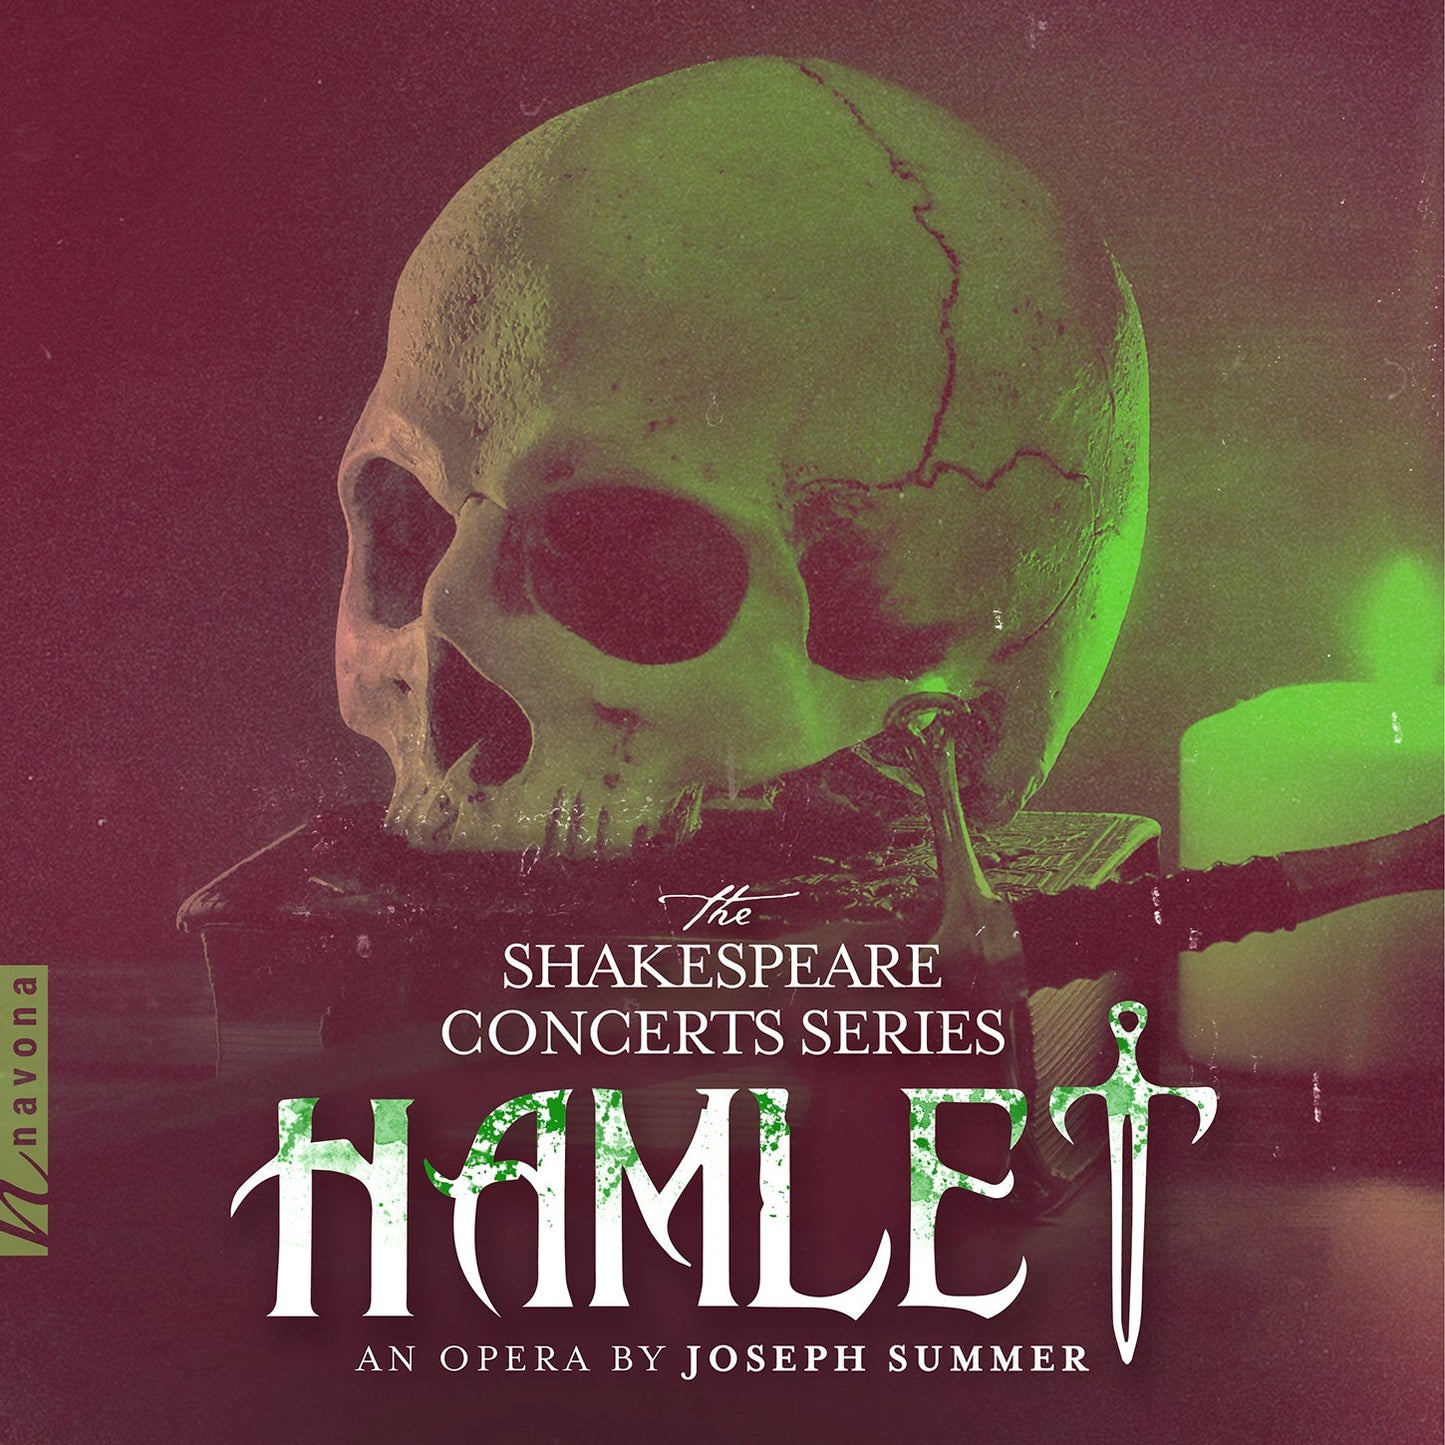 Summer: The Shakespeare Concert Series - Hamlet